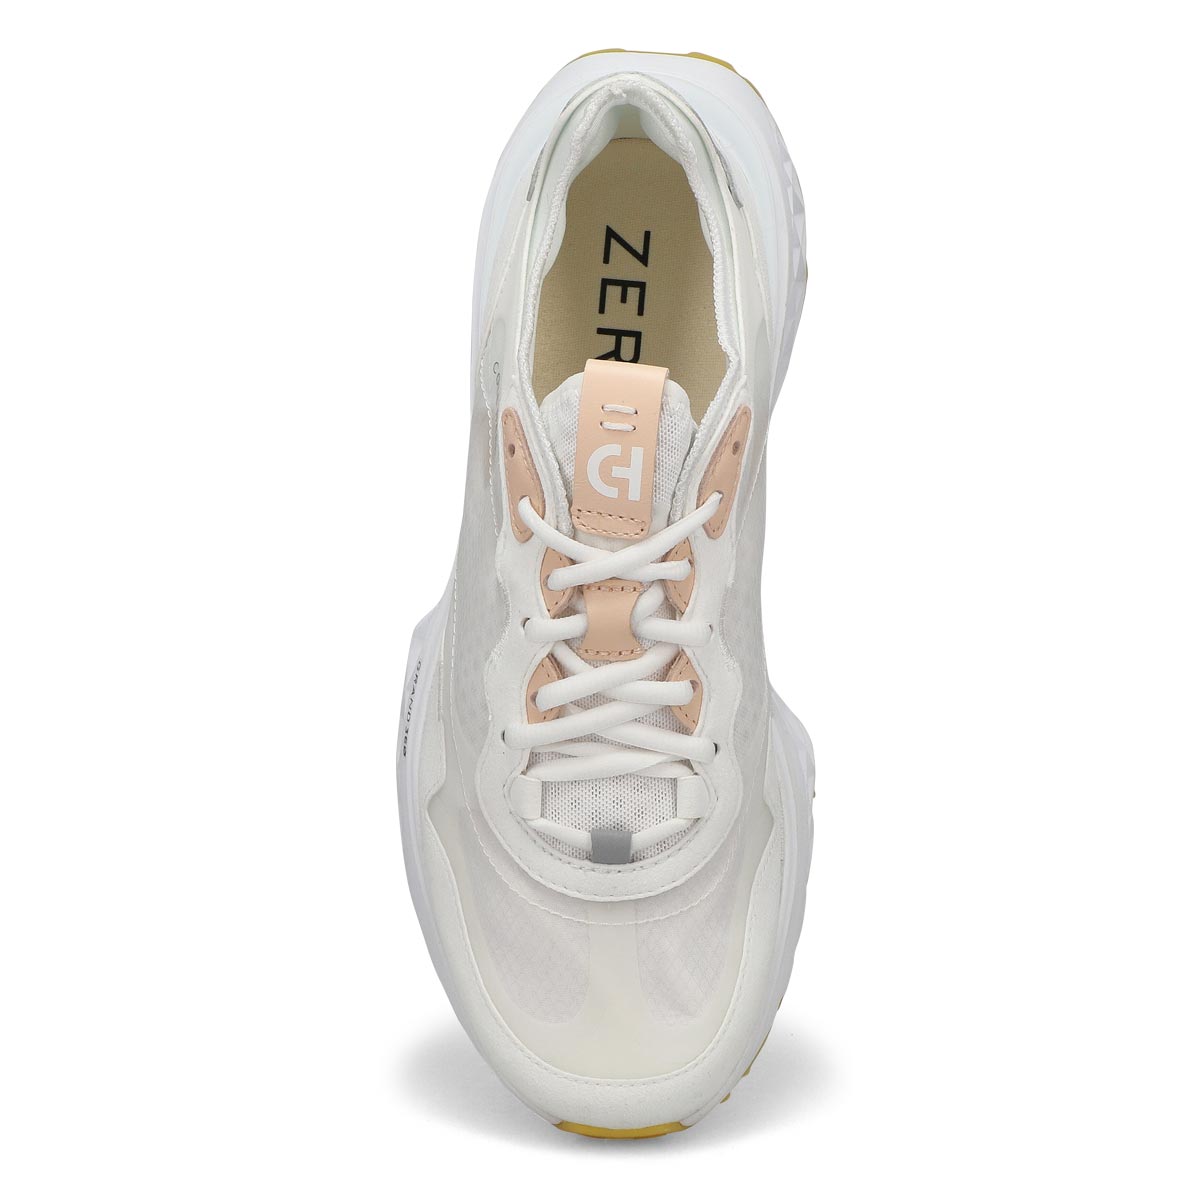 Women's Zero Grand Casual Sneaker - White/Tan